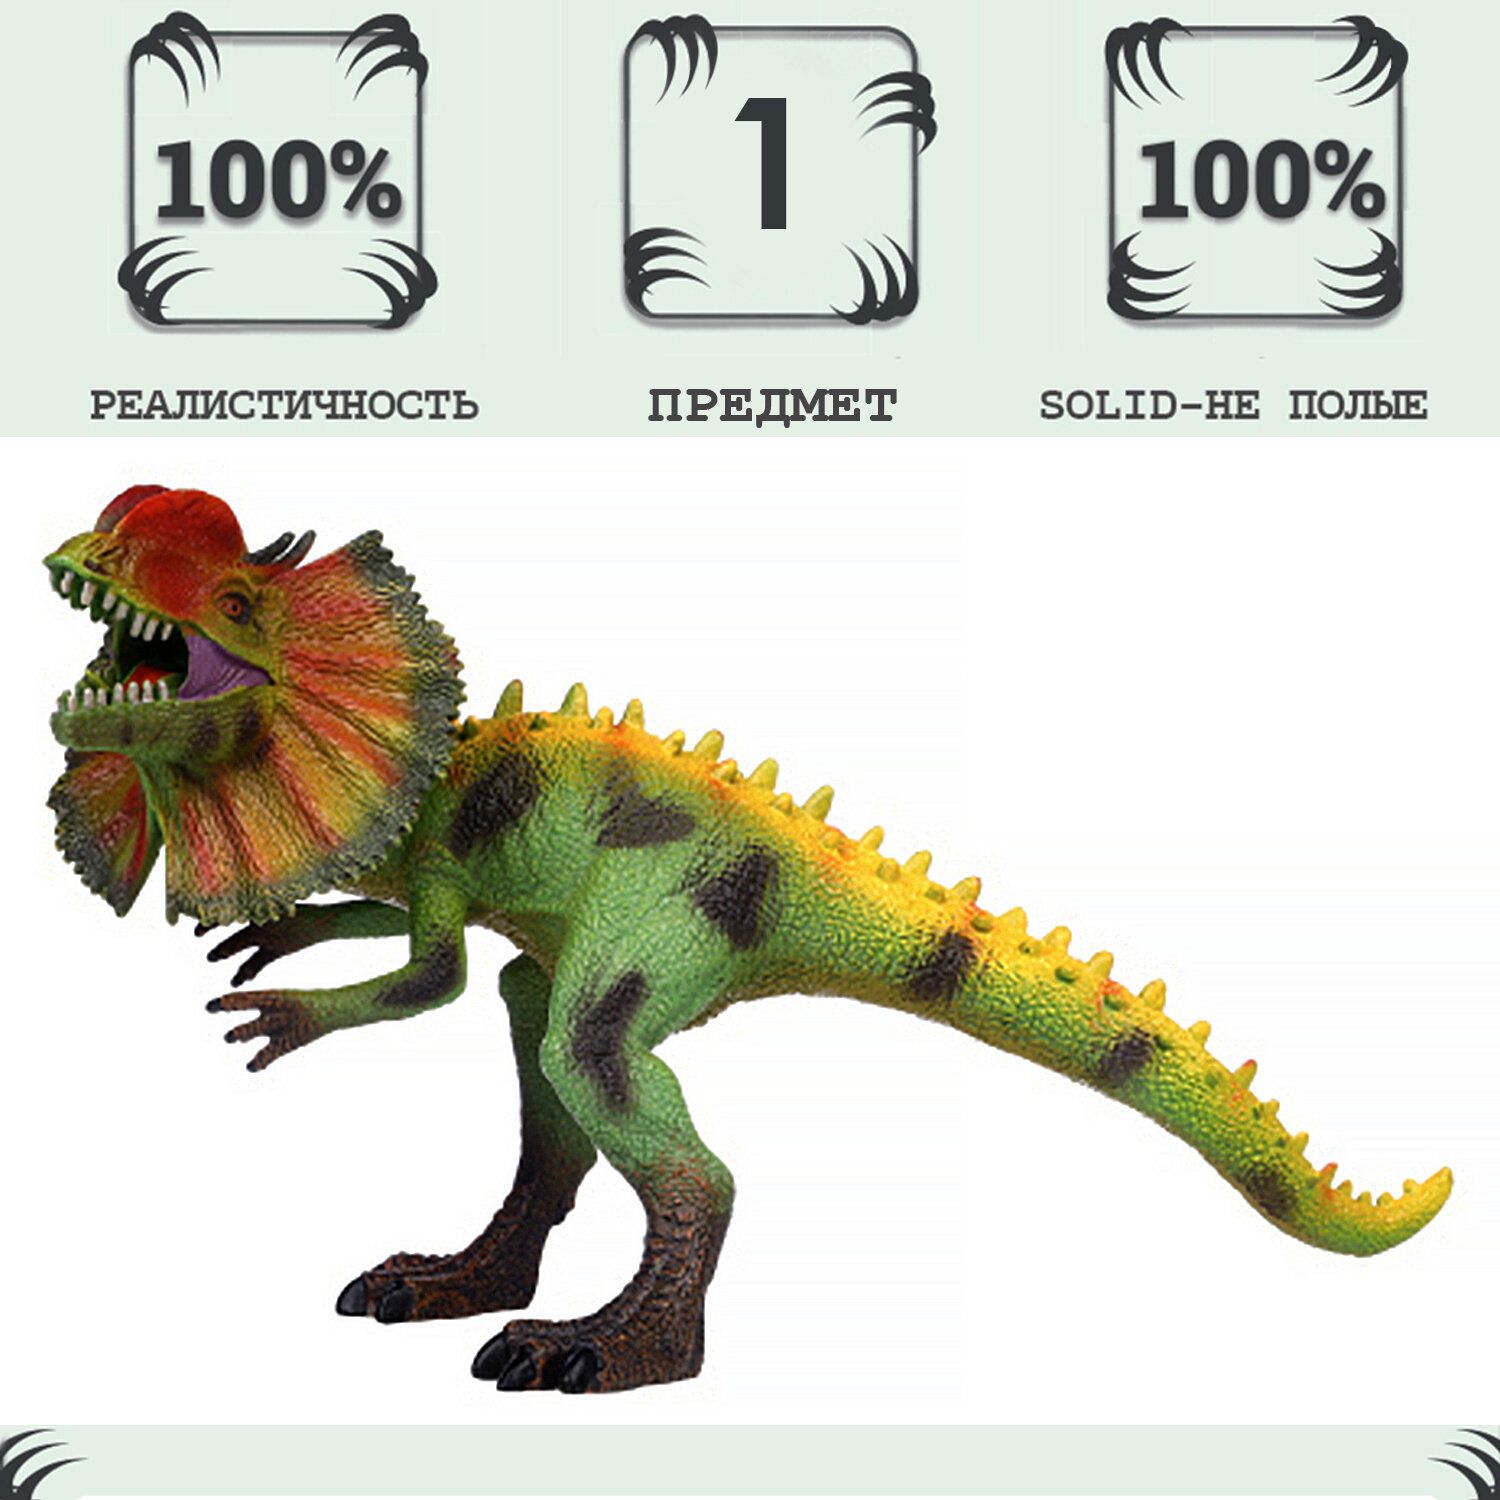 Игрушка динозавр серии "Мир динозавров" - Фигурка Дилофозавр